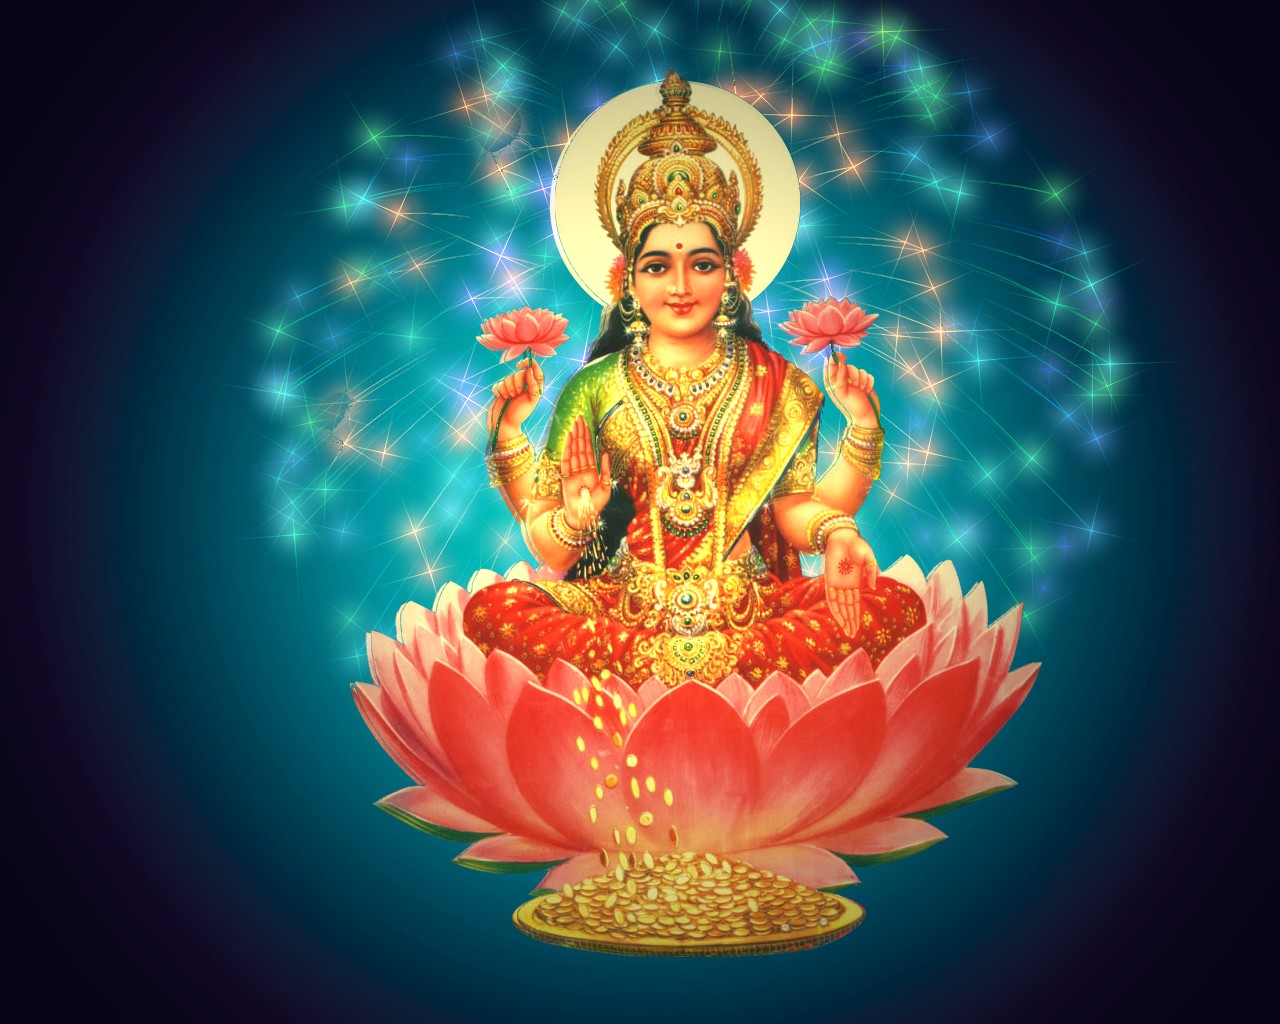 Goddess In Lotus Flower - HD Wallpaper 